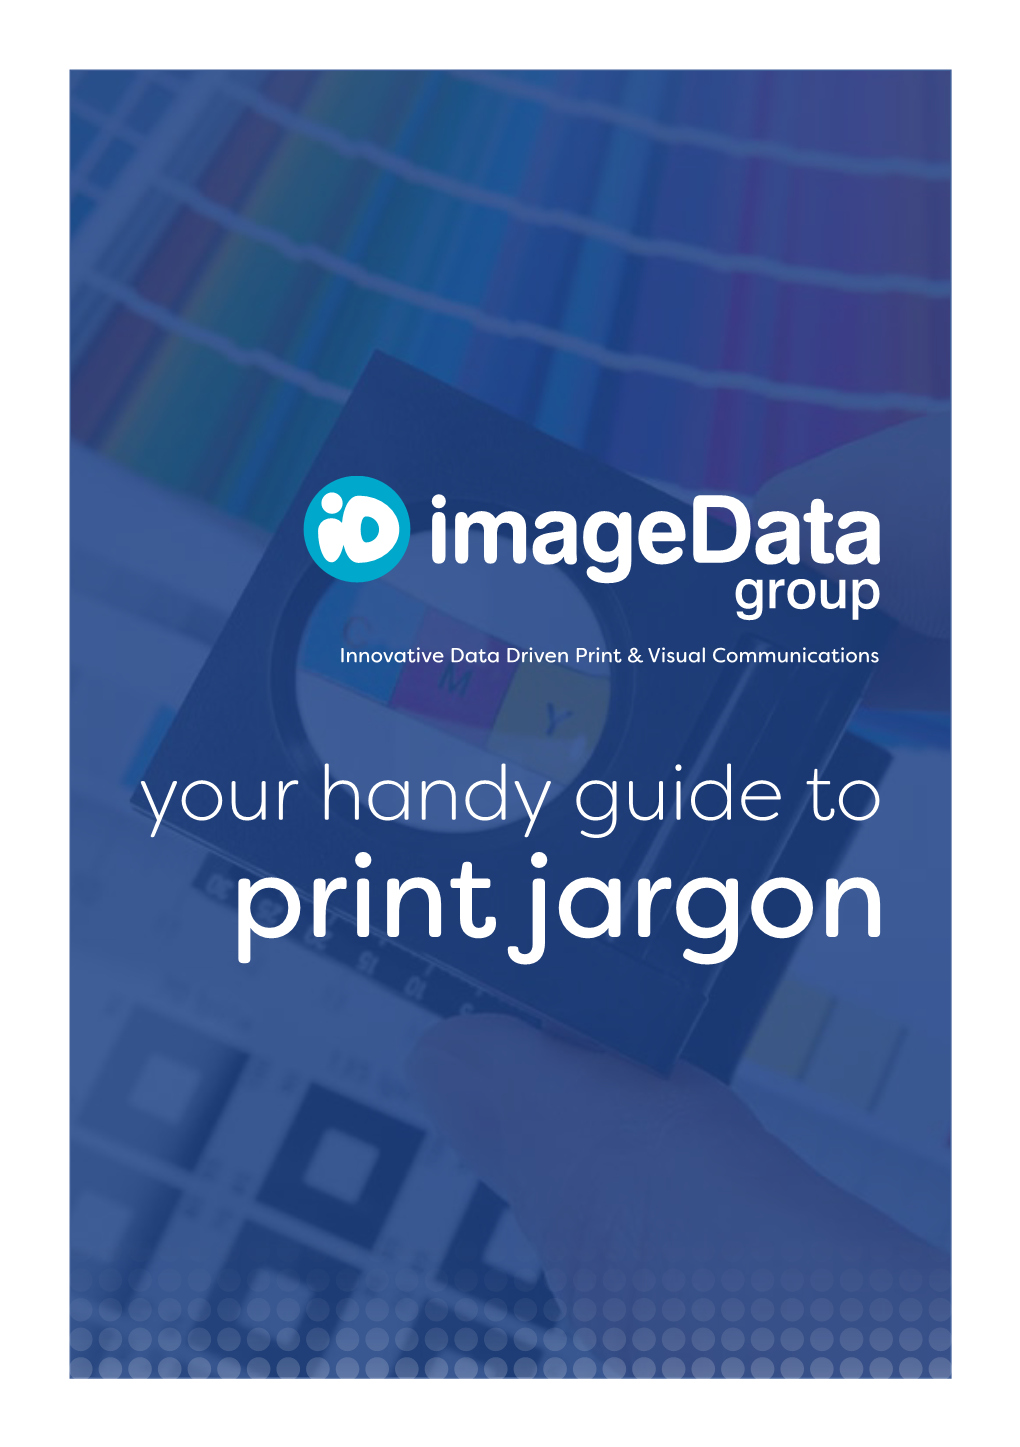 Print Jargon 319890 Idg.Qxd:Idg Print Jargon 17/4/15 09:28 Page 2